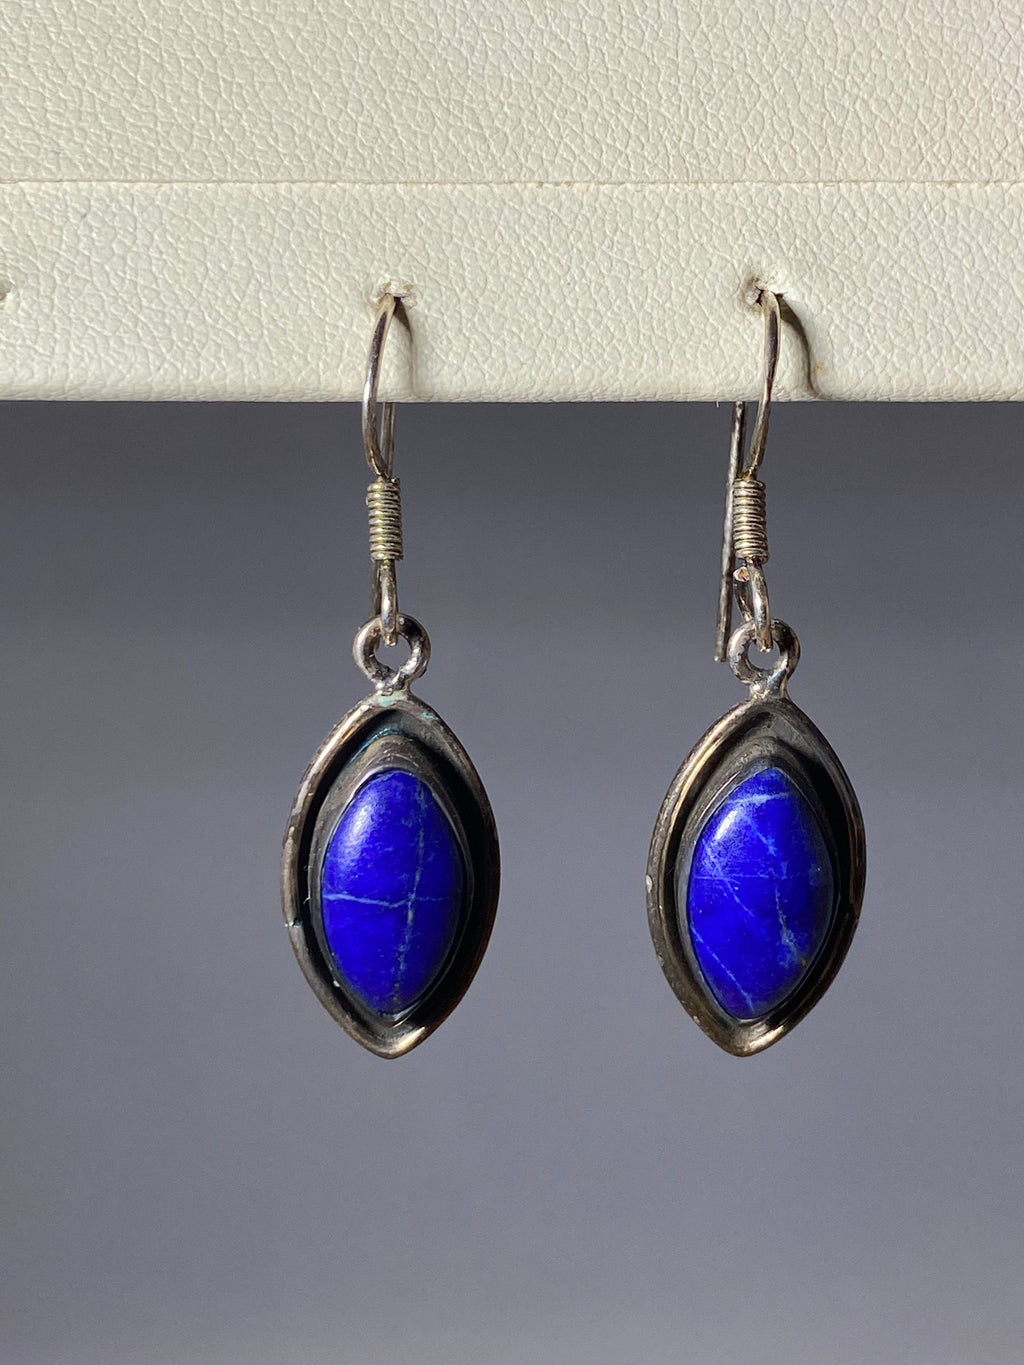 Lapis Lazuli Earrings - Lighten Up Shop